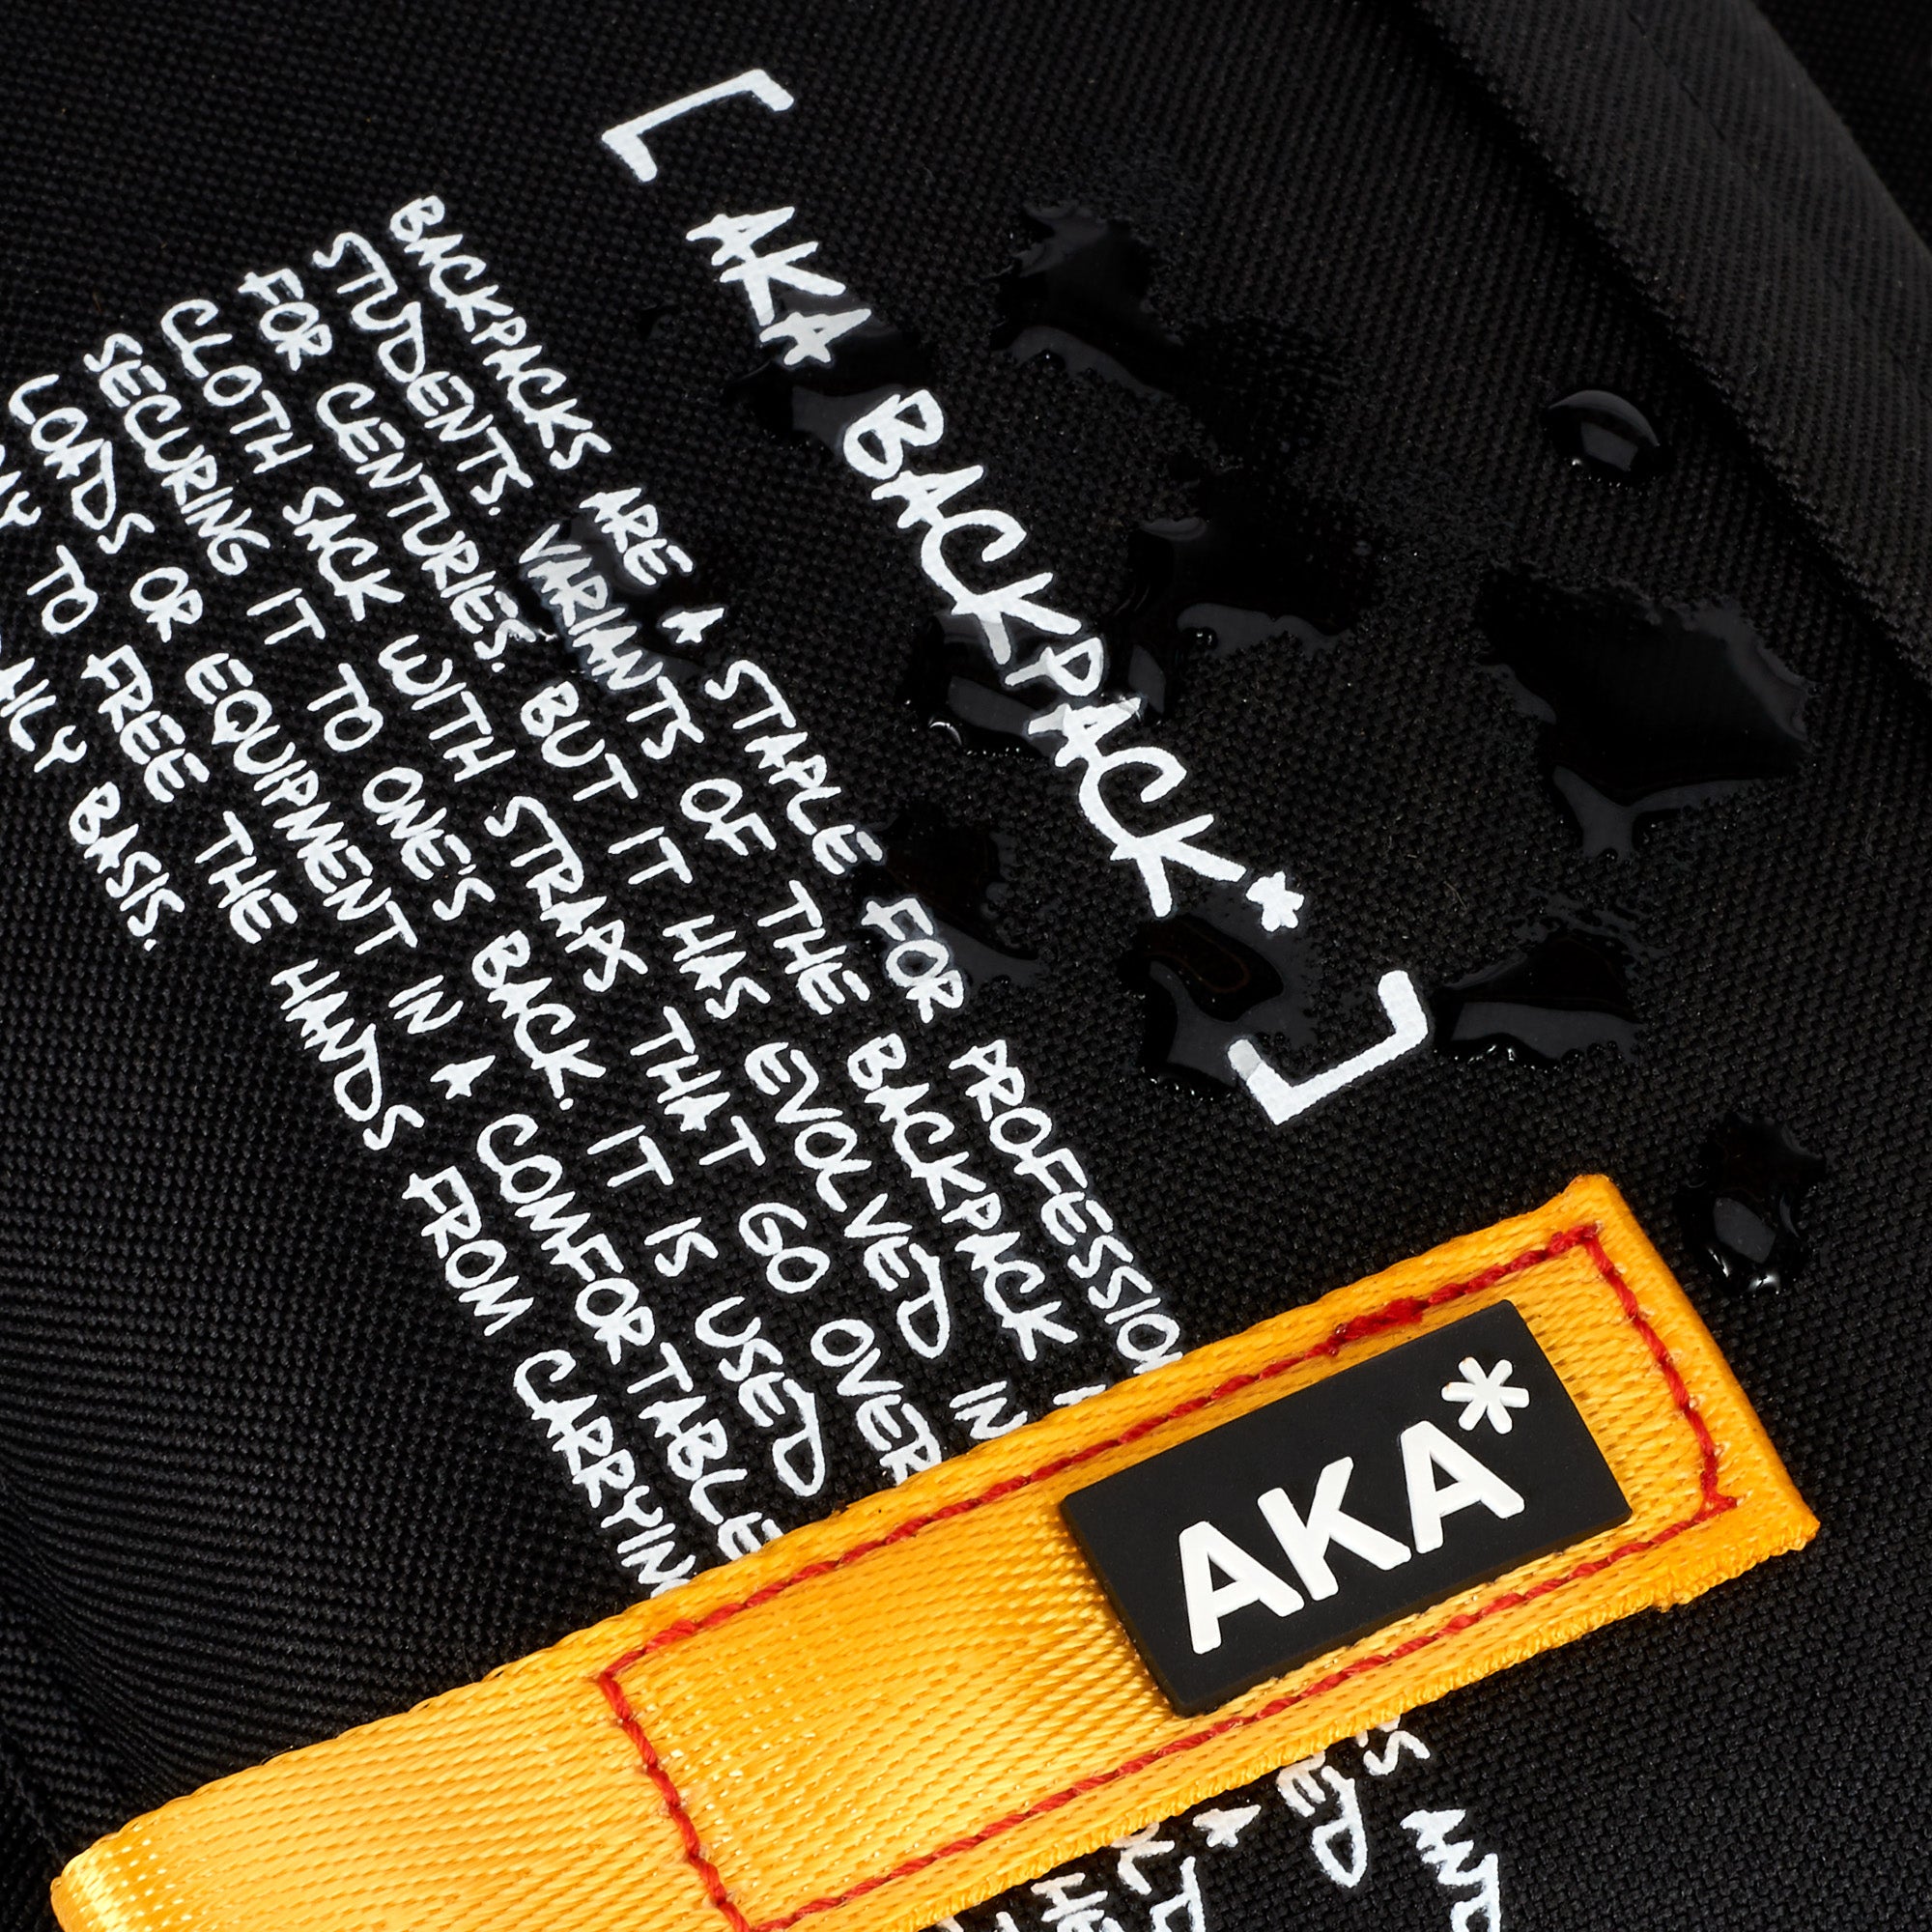 Brixton Backpack-Backpack-AKA*-Black-SchoolBagsAndStuff